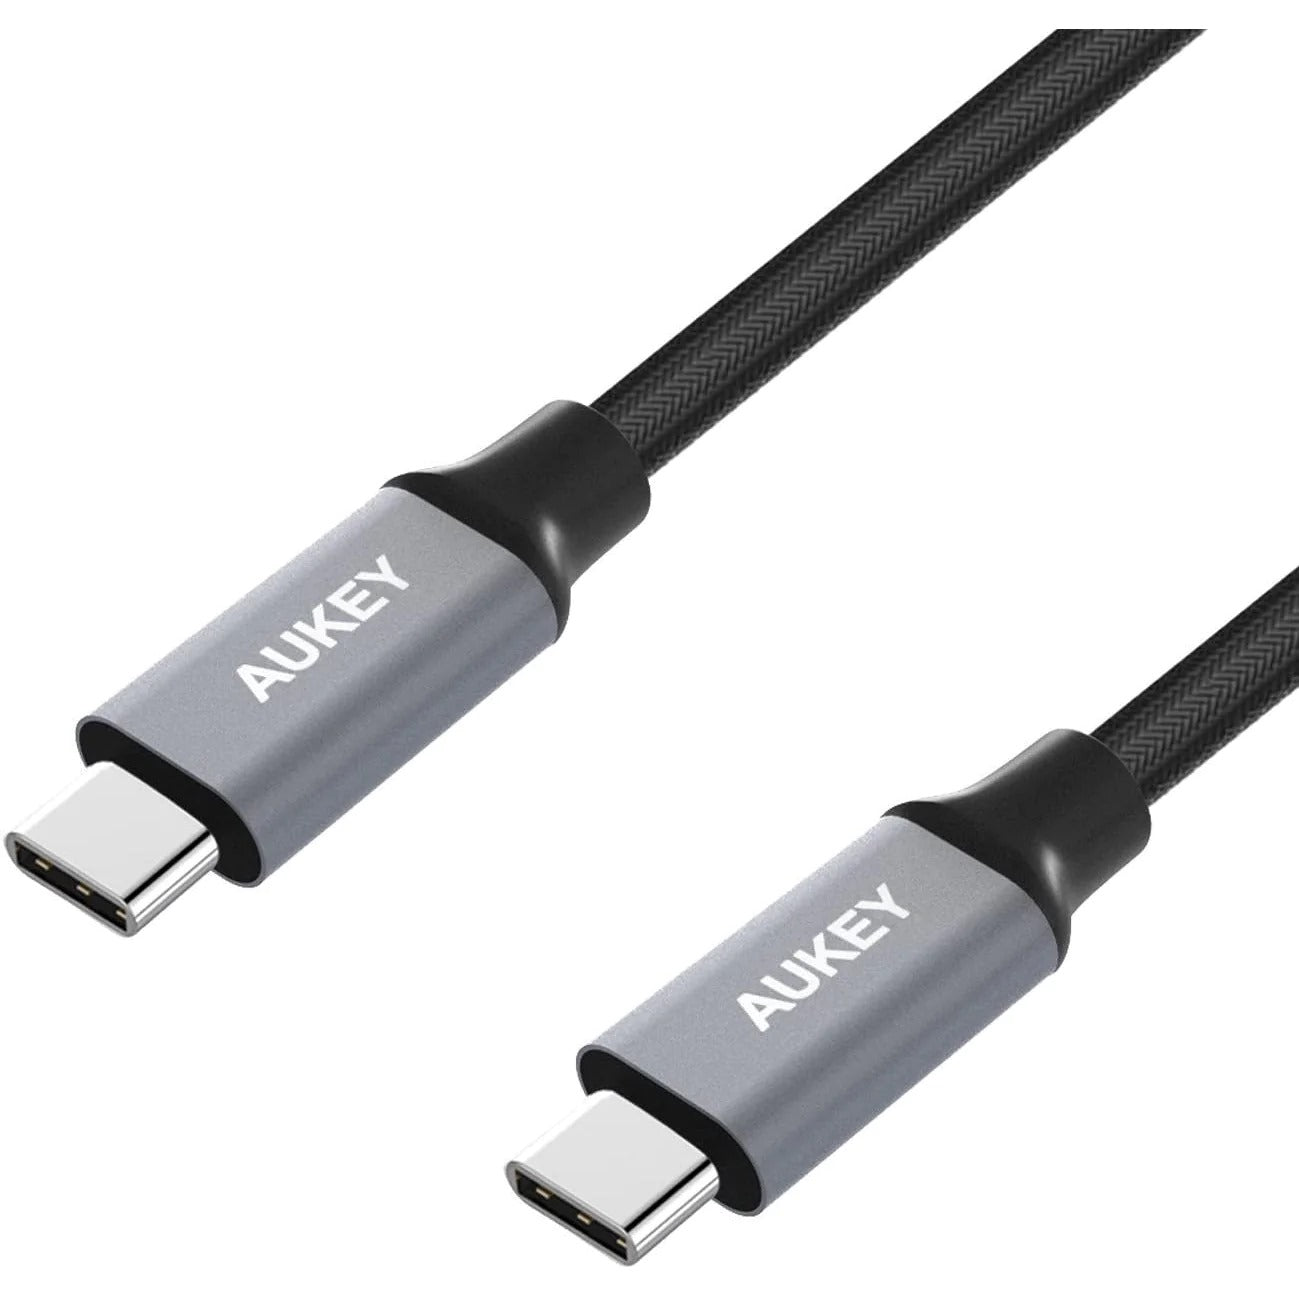 Aukey Braided Nylon USB 2.0 C to C Cable（1m / 3.3ft) CB-CD5 BK - Black